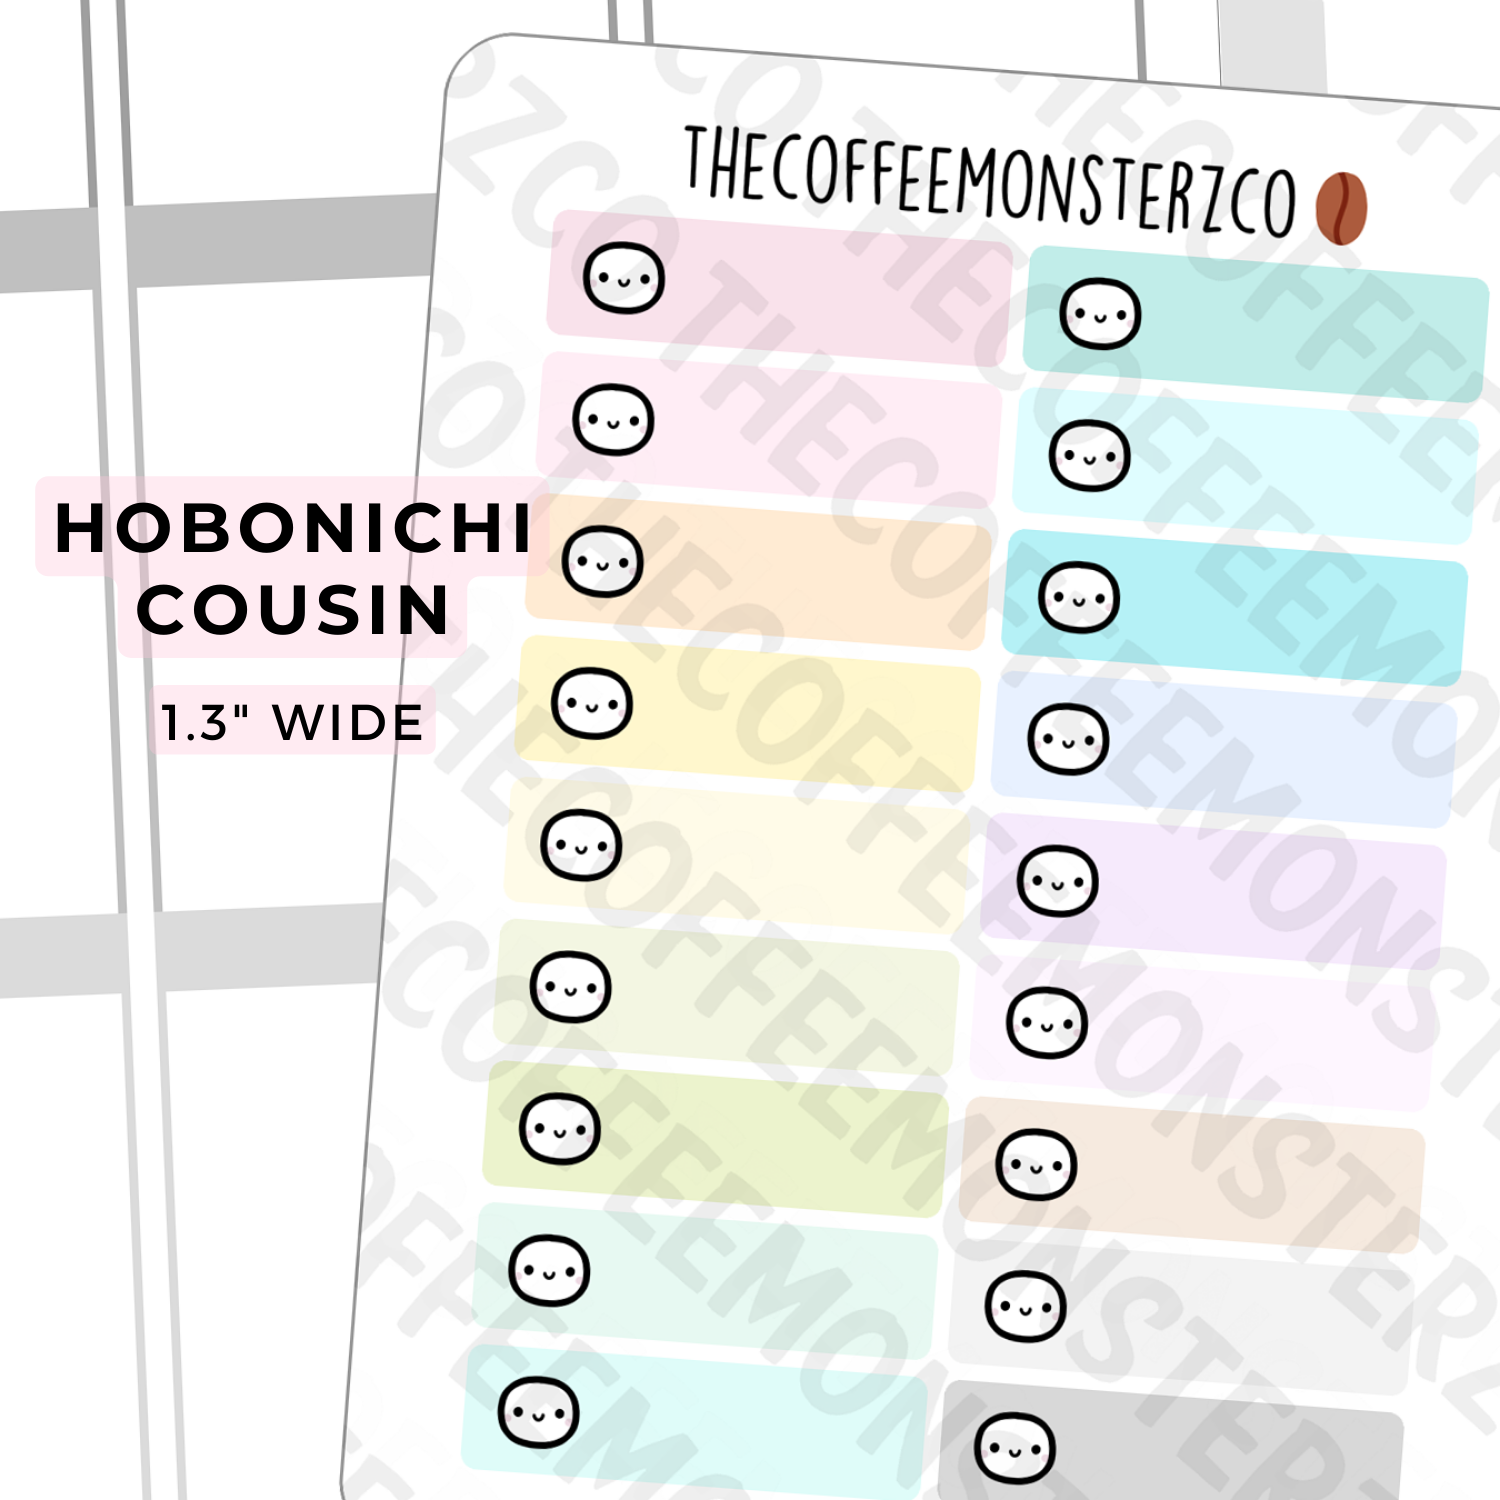 Hobonichi Cousin Emoti Labels